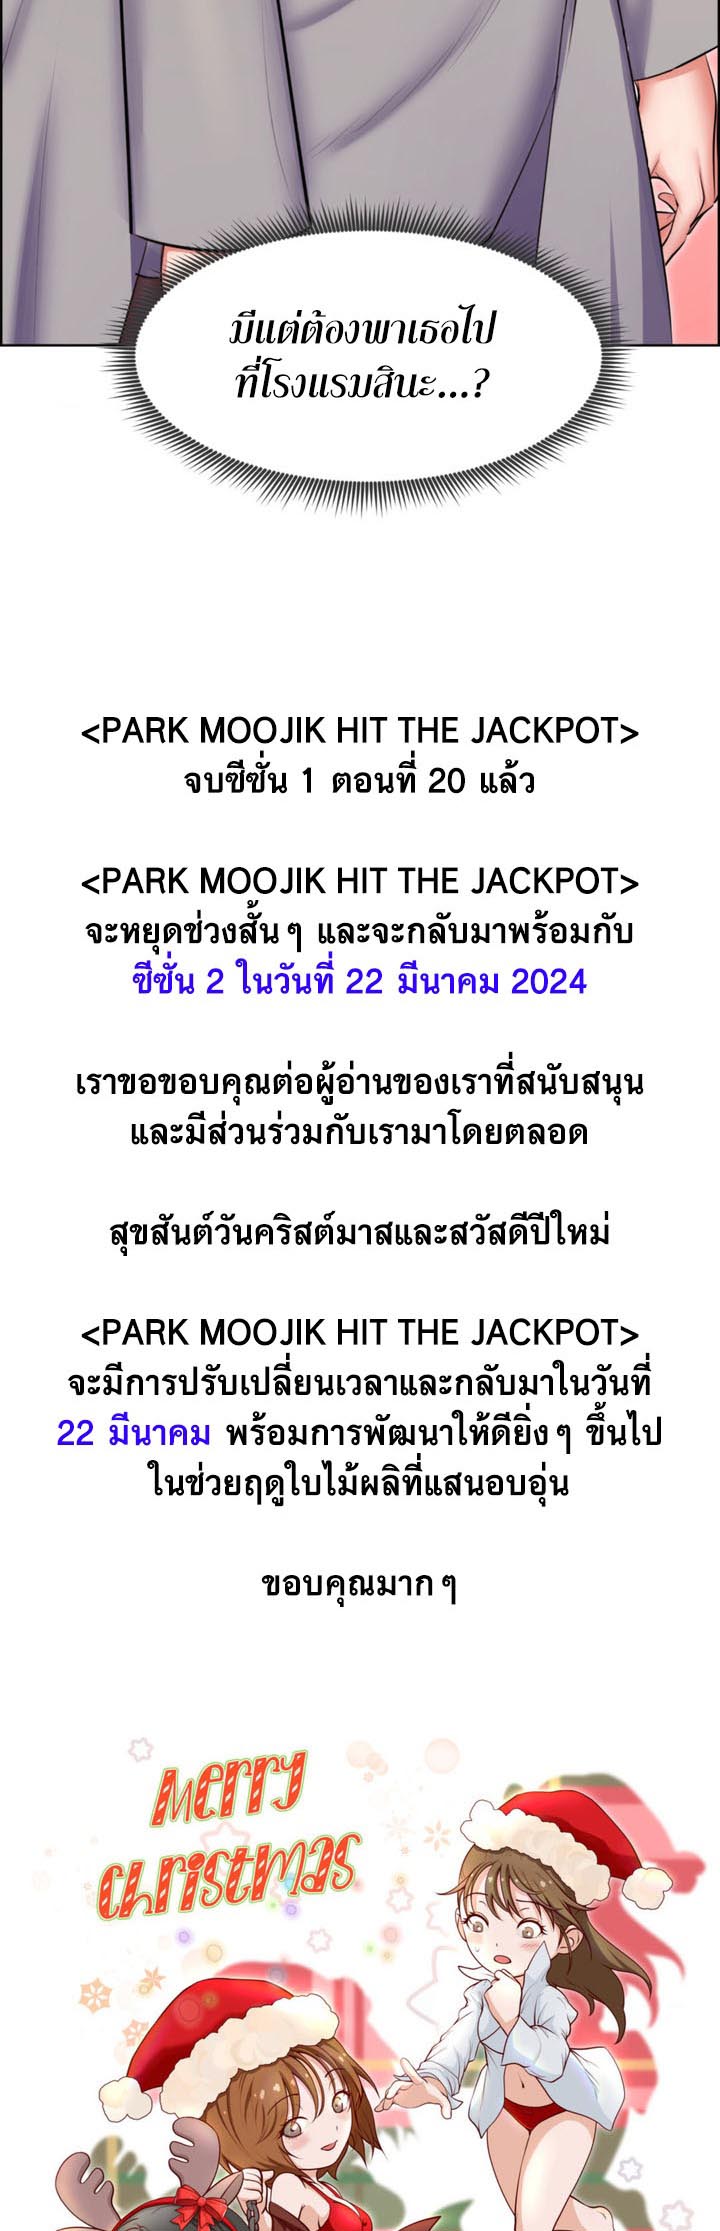 Park Moojik Hit the Jackpot 20 50